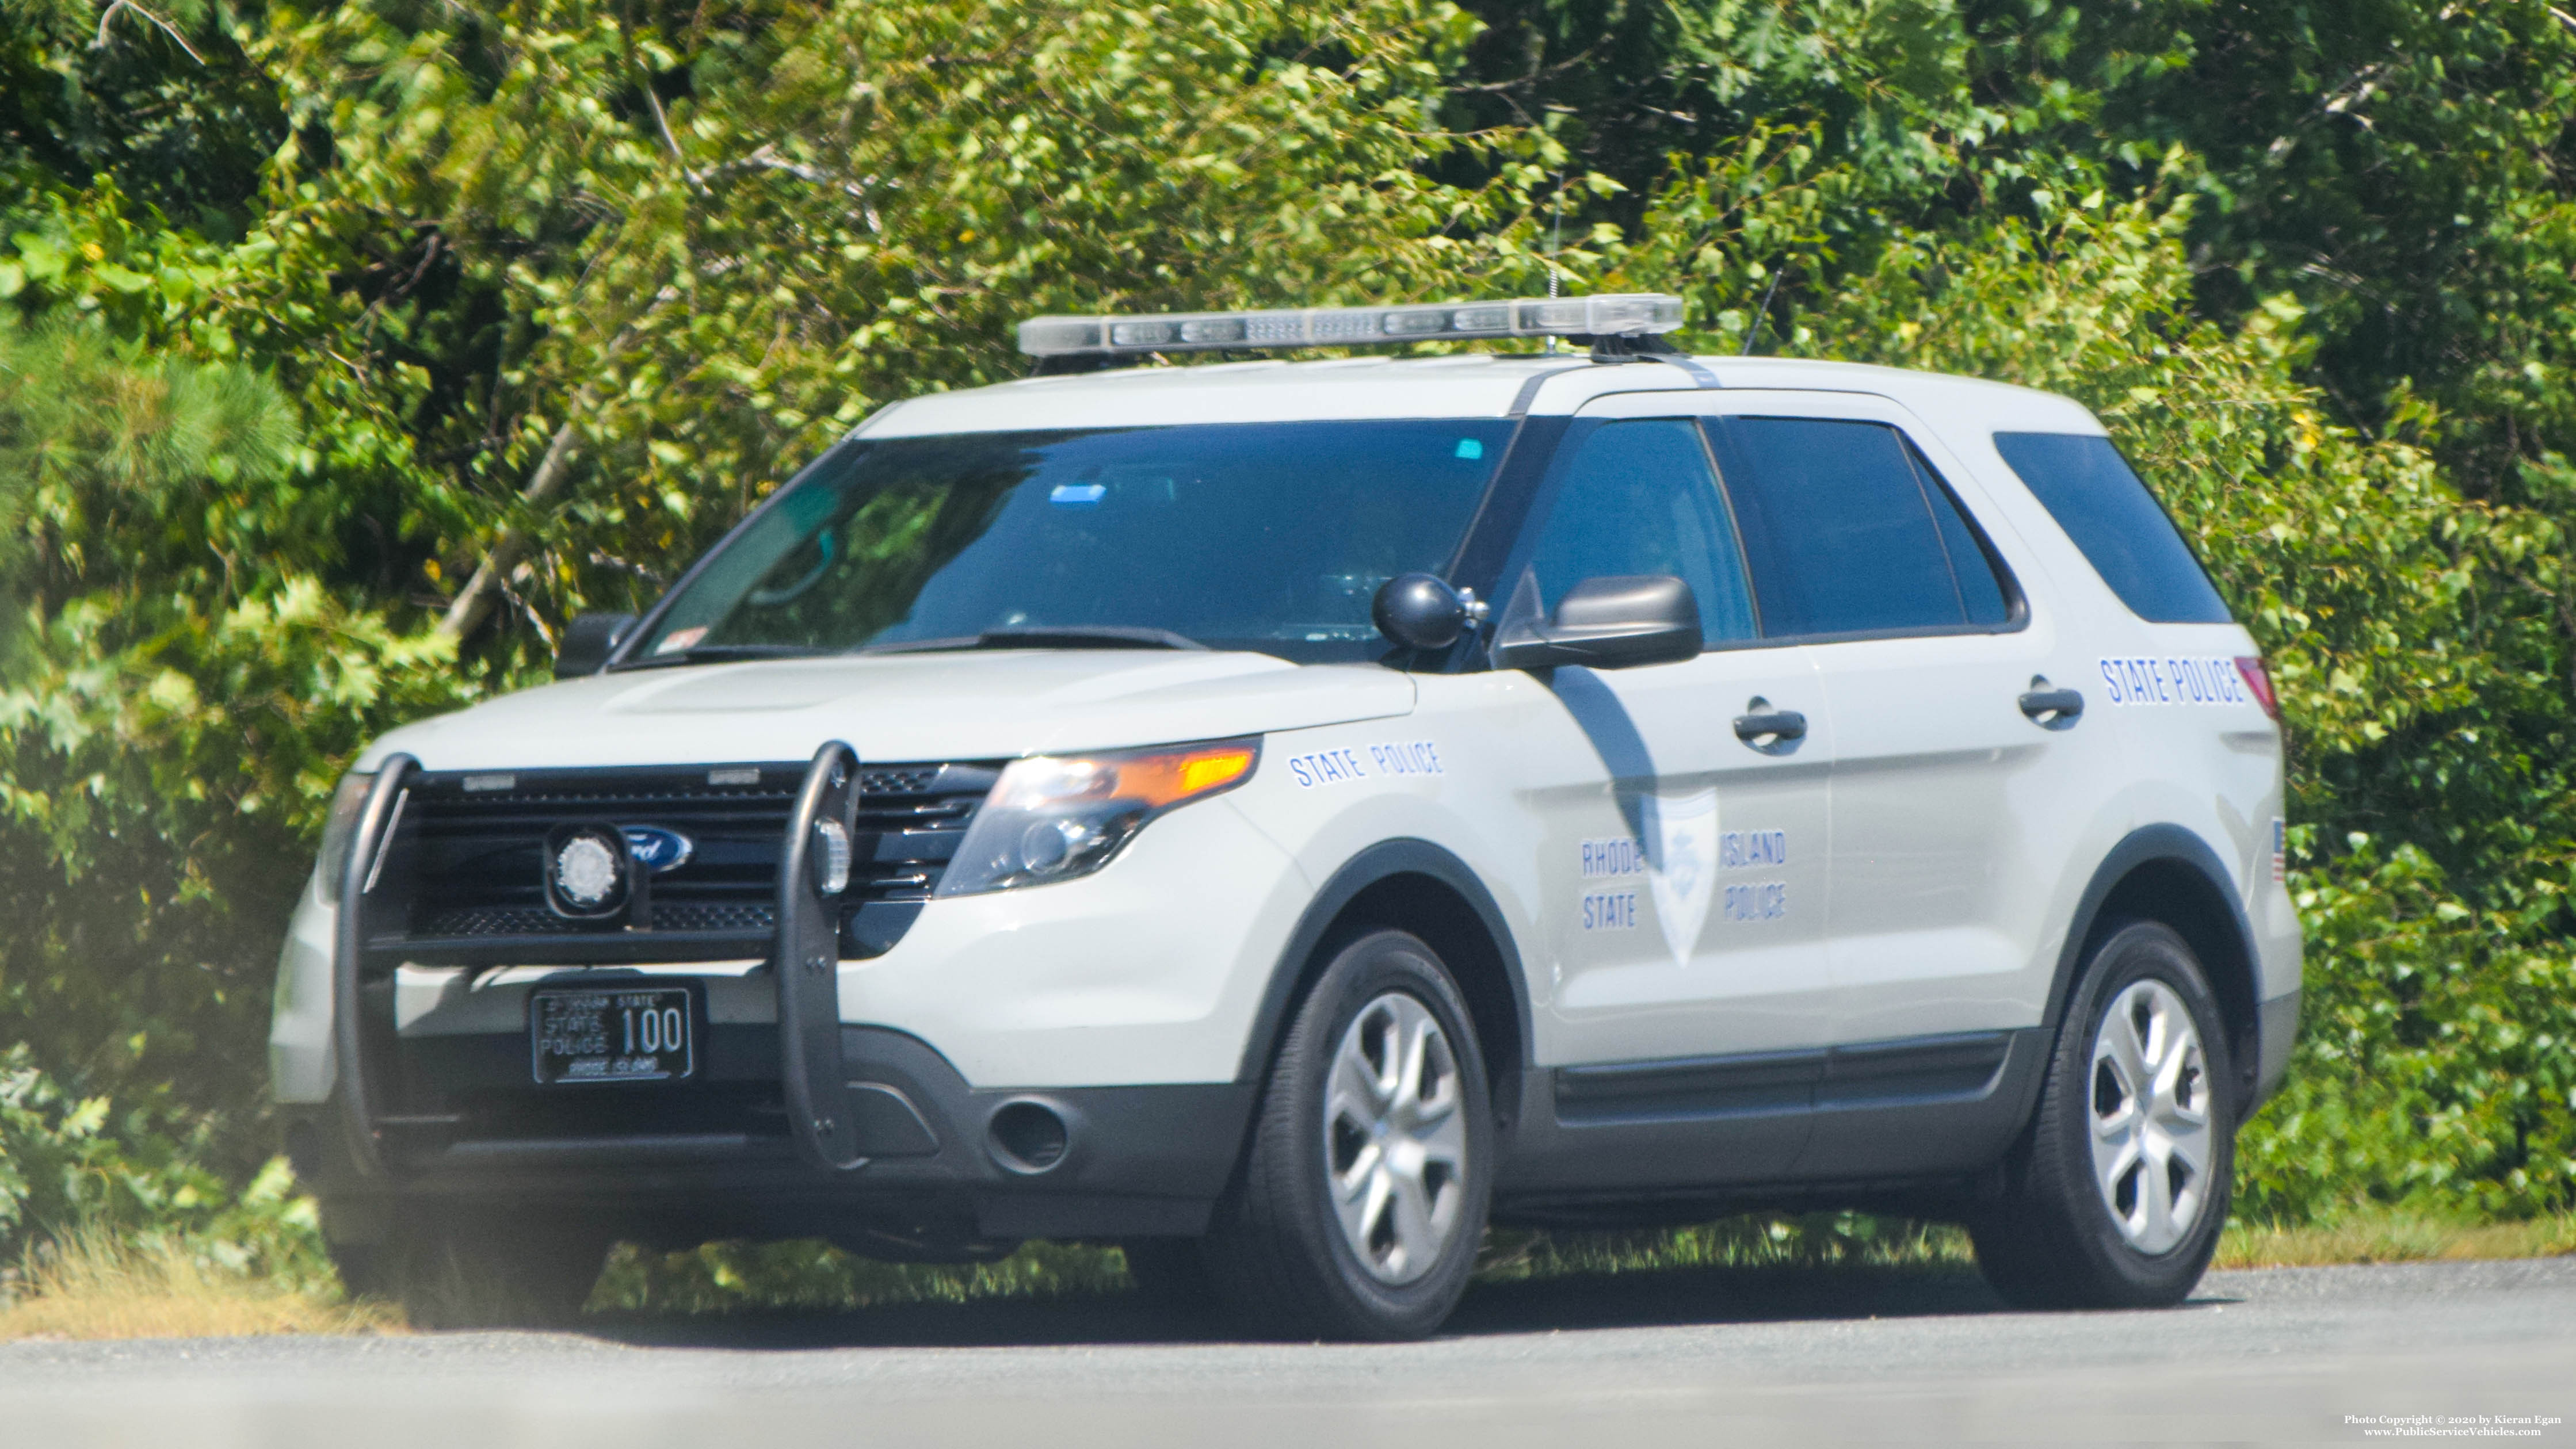 A photo  of Rhode Island State Police
            Cruiser 100, a 2013-2015 Ford Police Interceptor Utility             taken by Kieran Egan